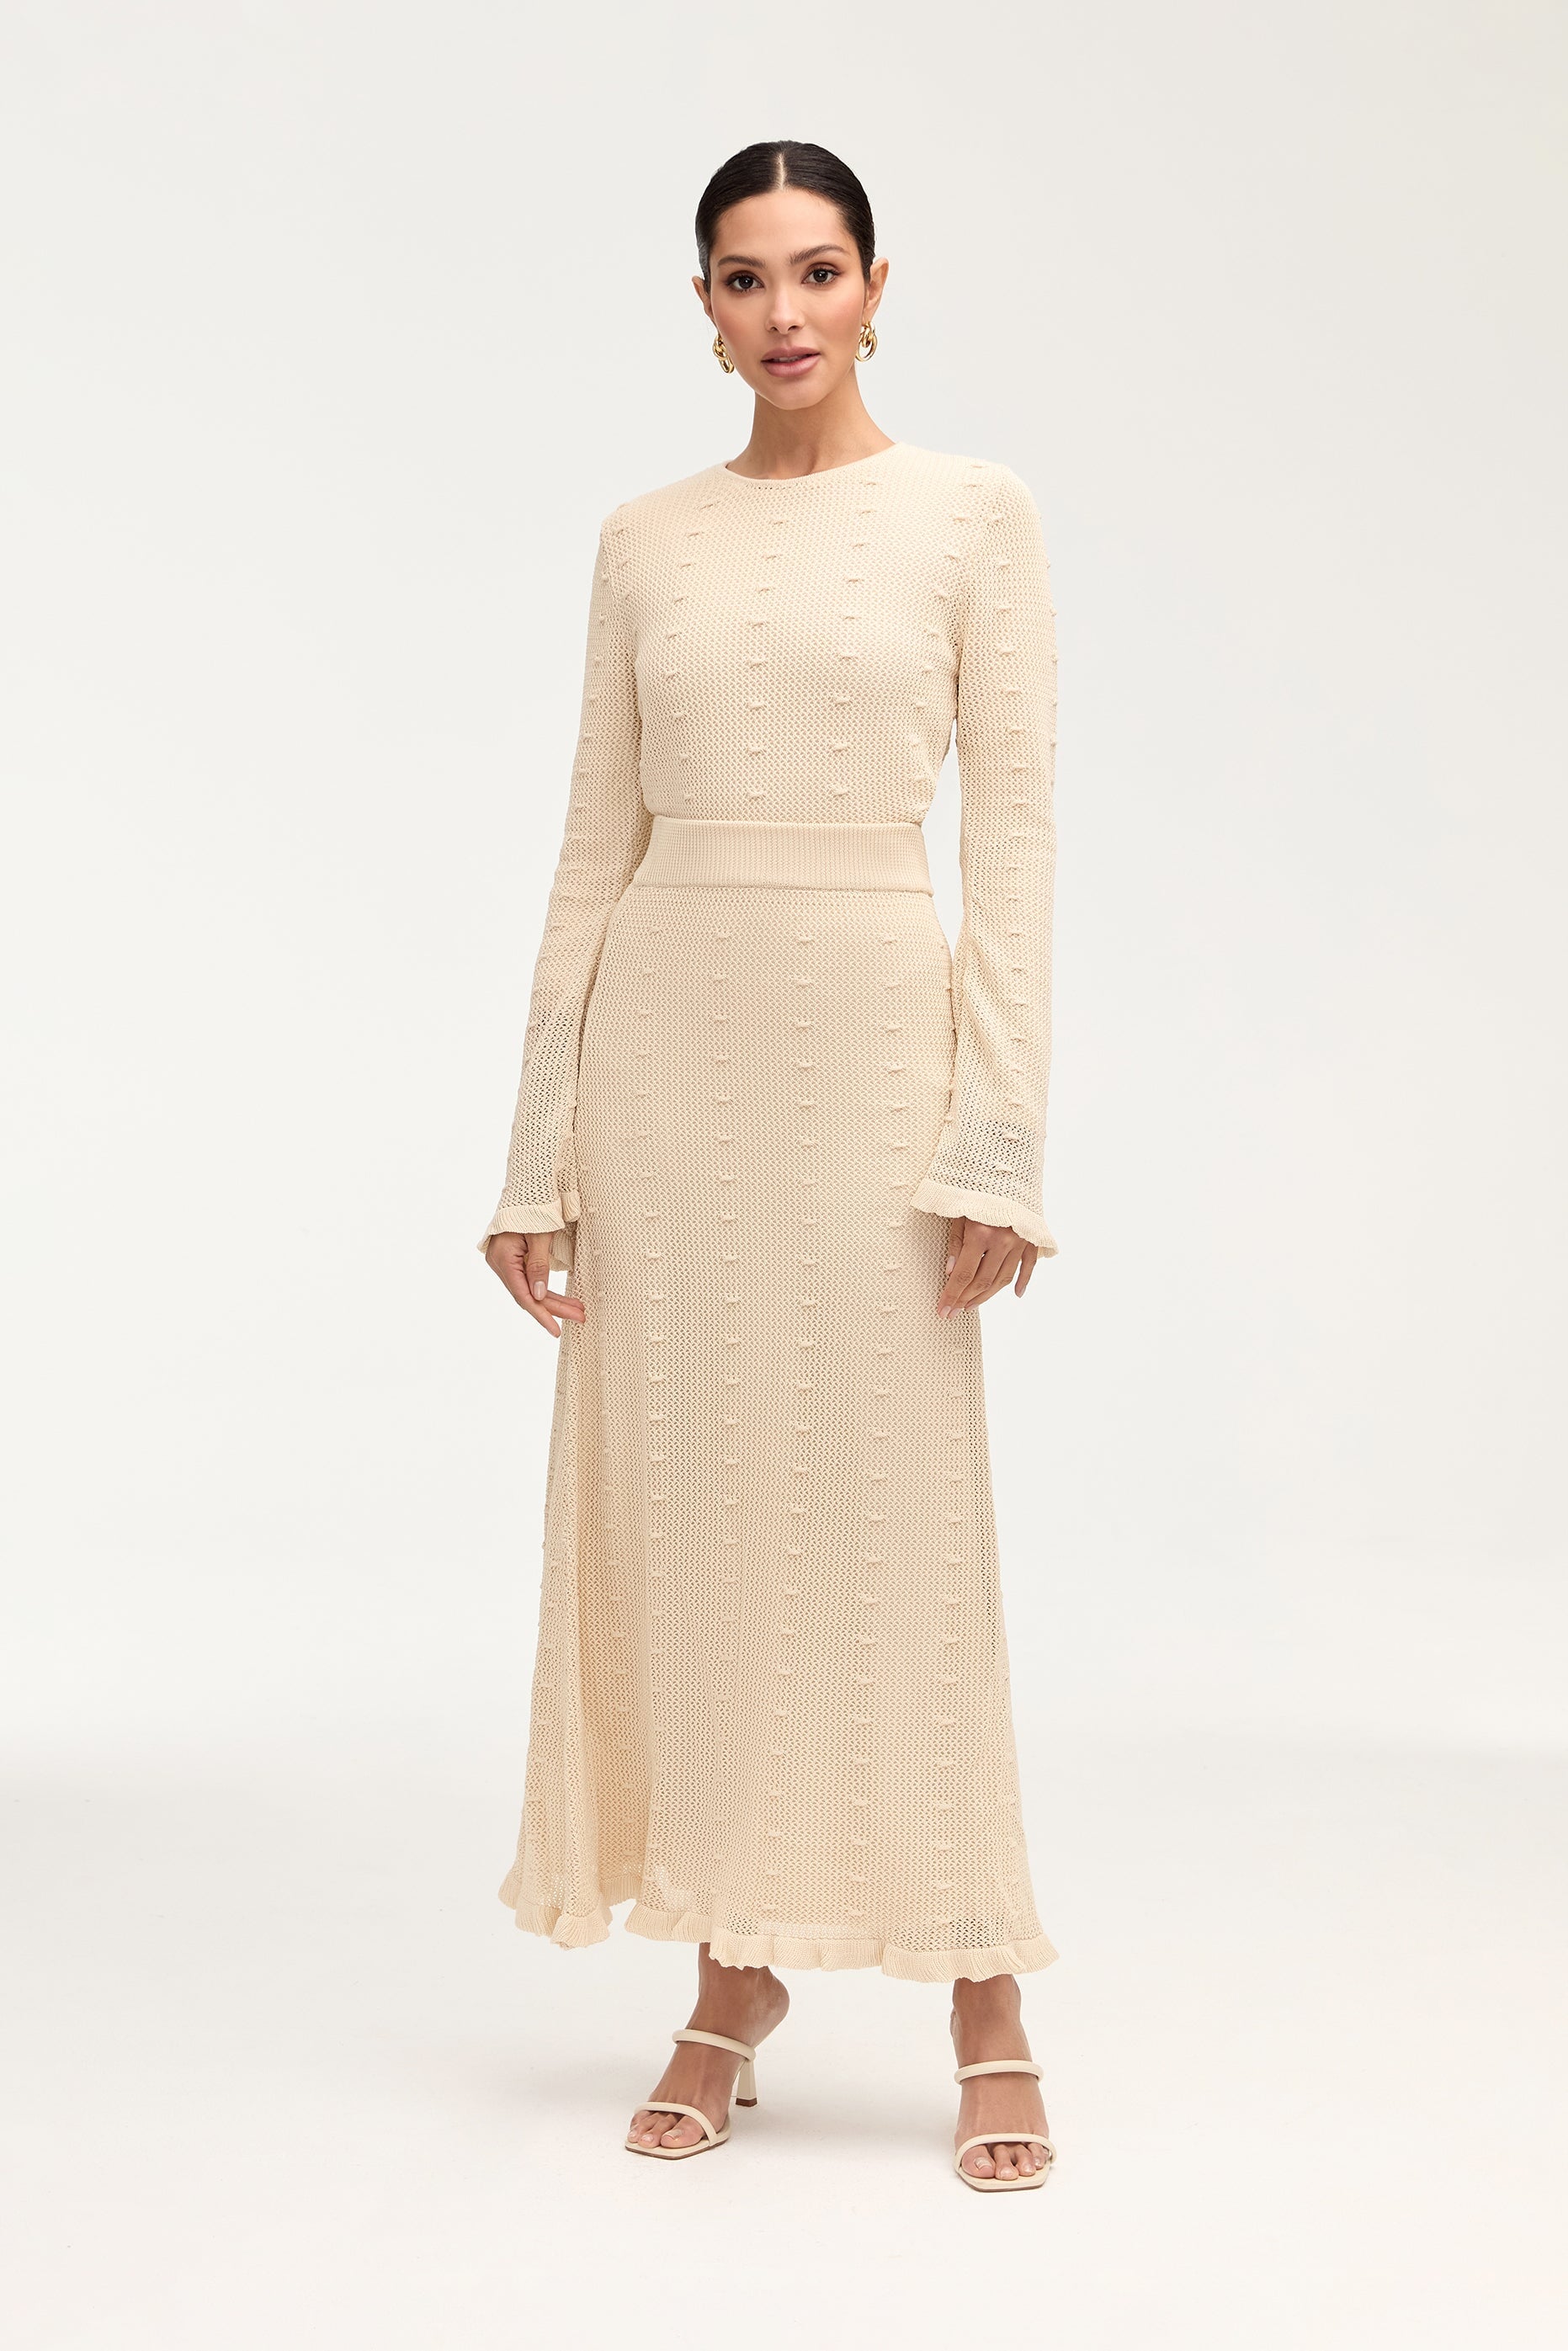 Yara Crochet Maxi Skirt - Off White Clothing Veiled 